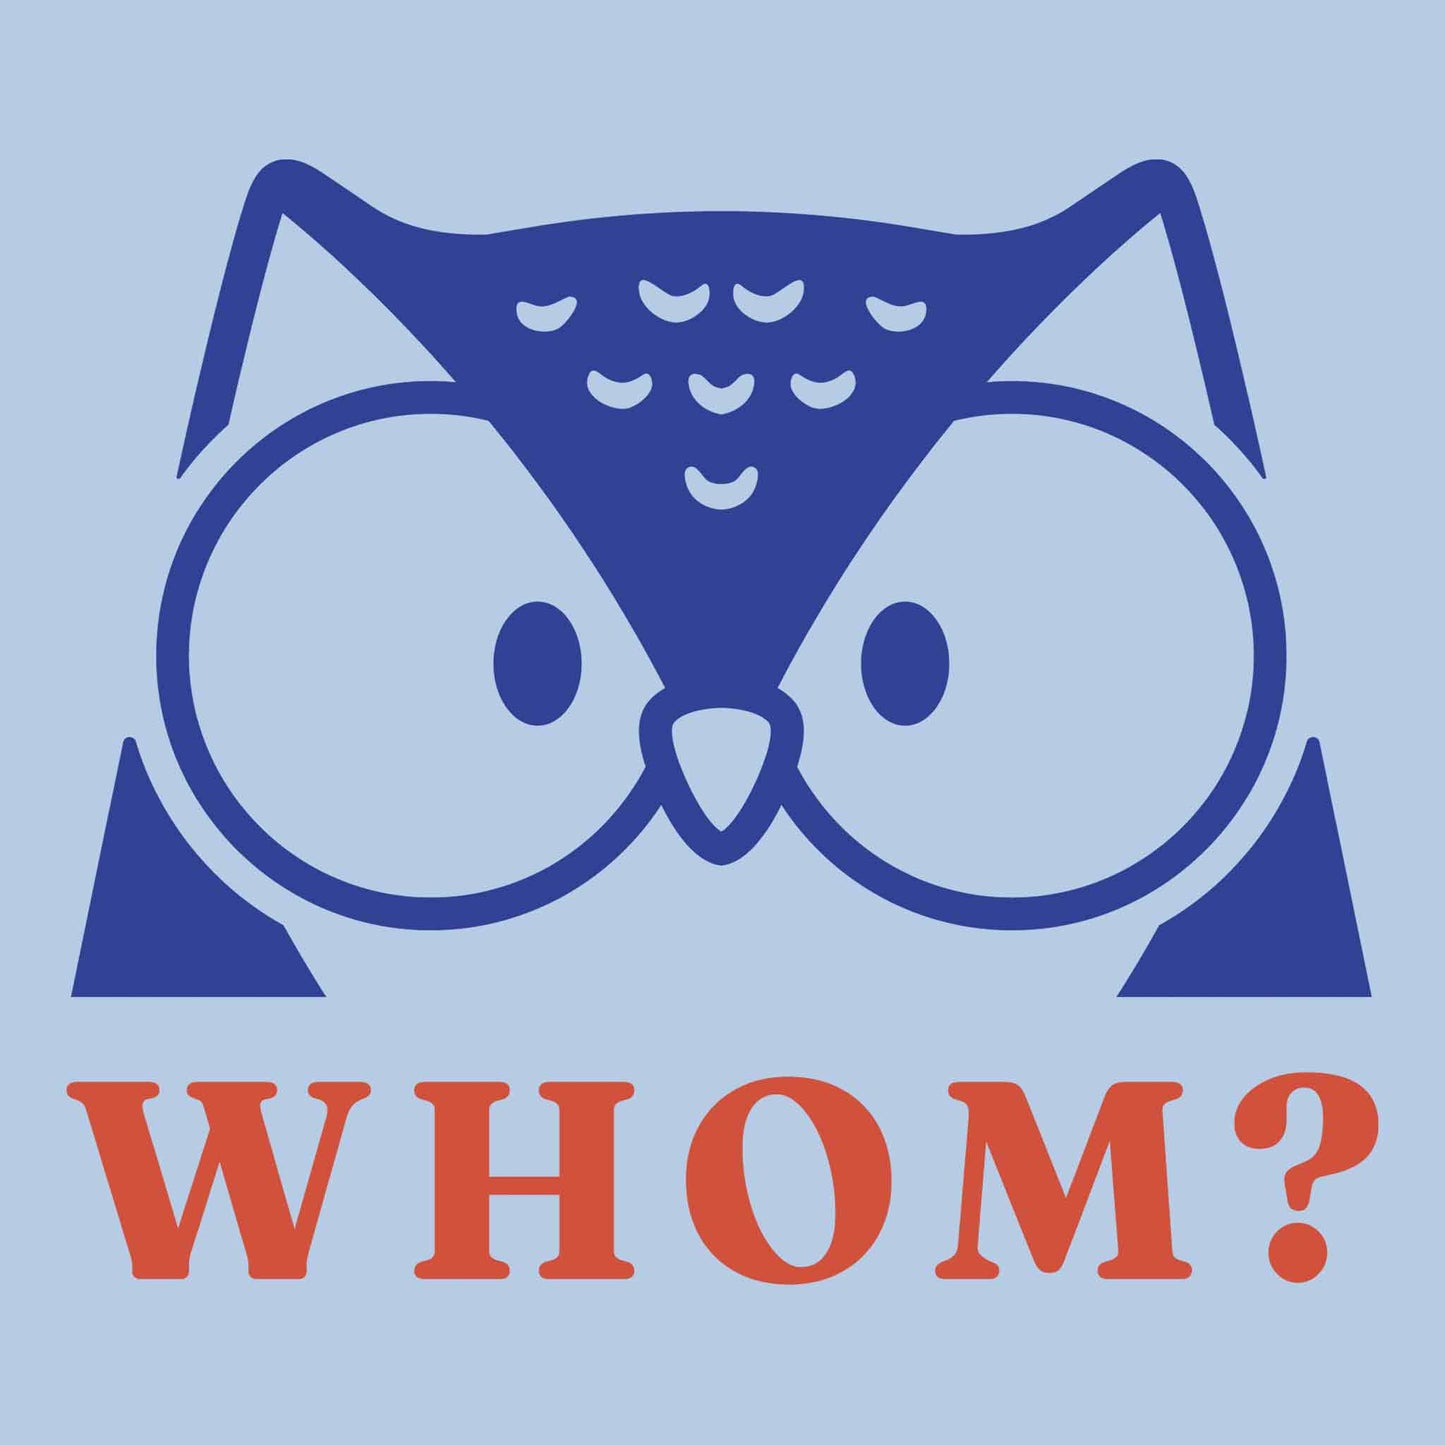 Whom? Grammar Owl T-Shirt